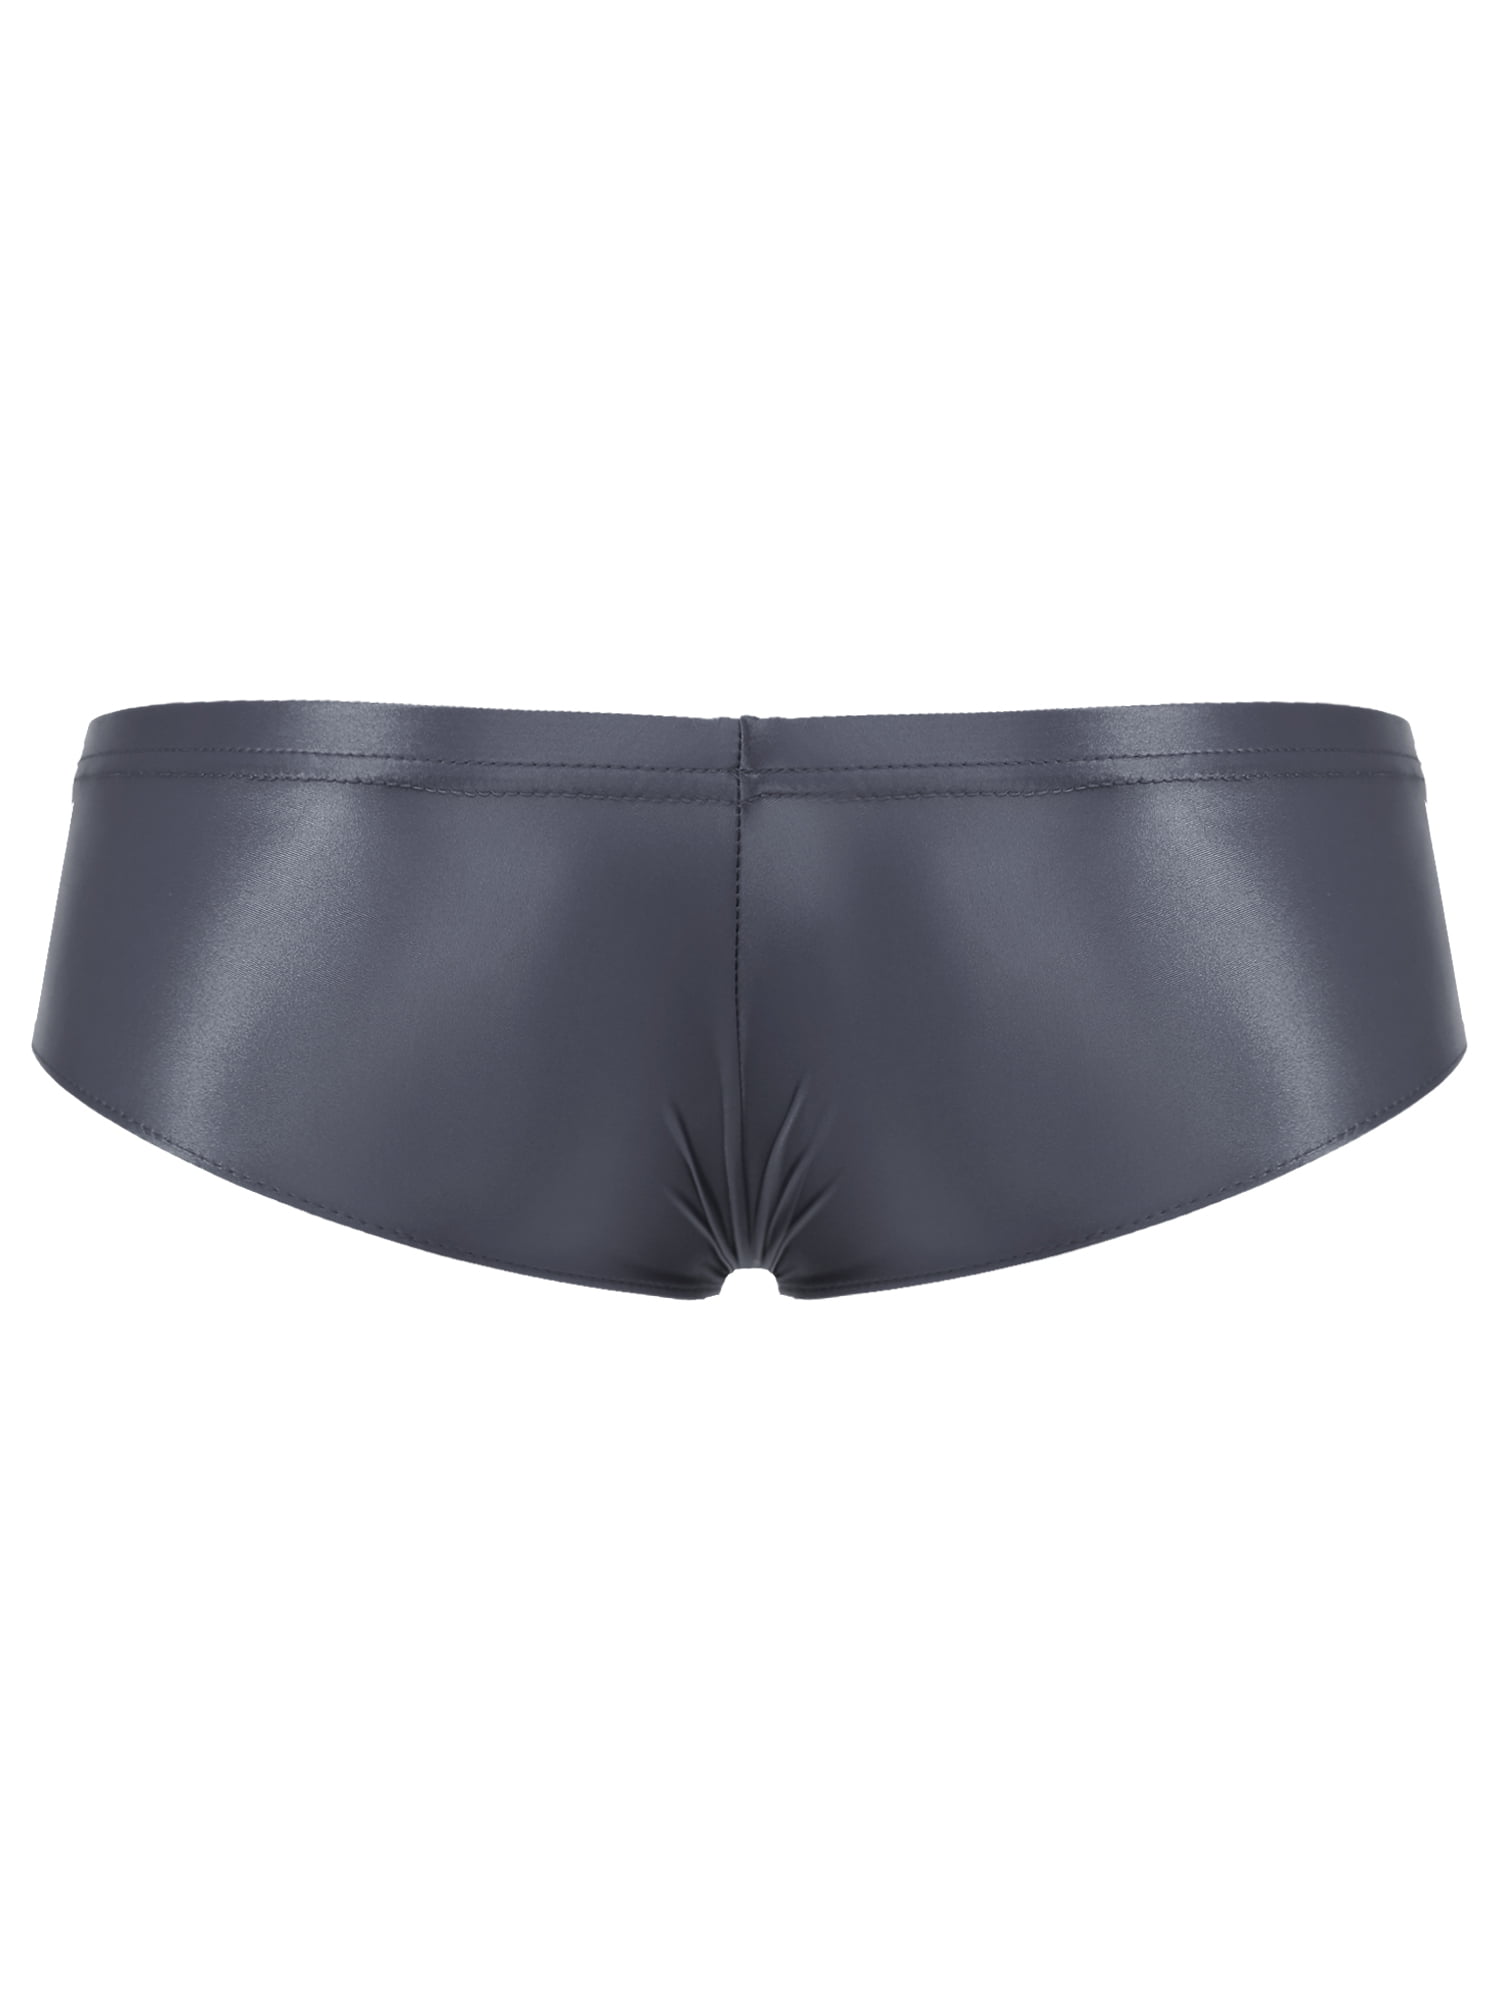 IEFIEL Mens Solid Color Underwear Glossy High Waist Swimming Underpants  Sunbathing Bikini Briefs Royal Blue XL 